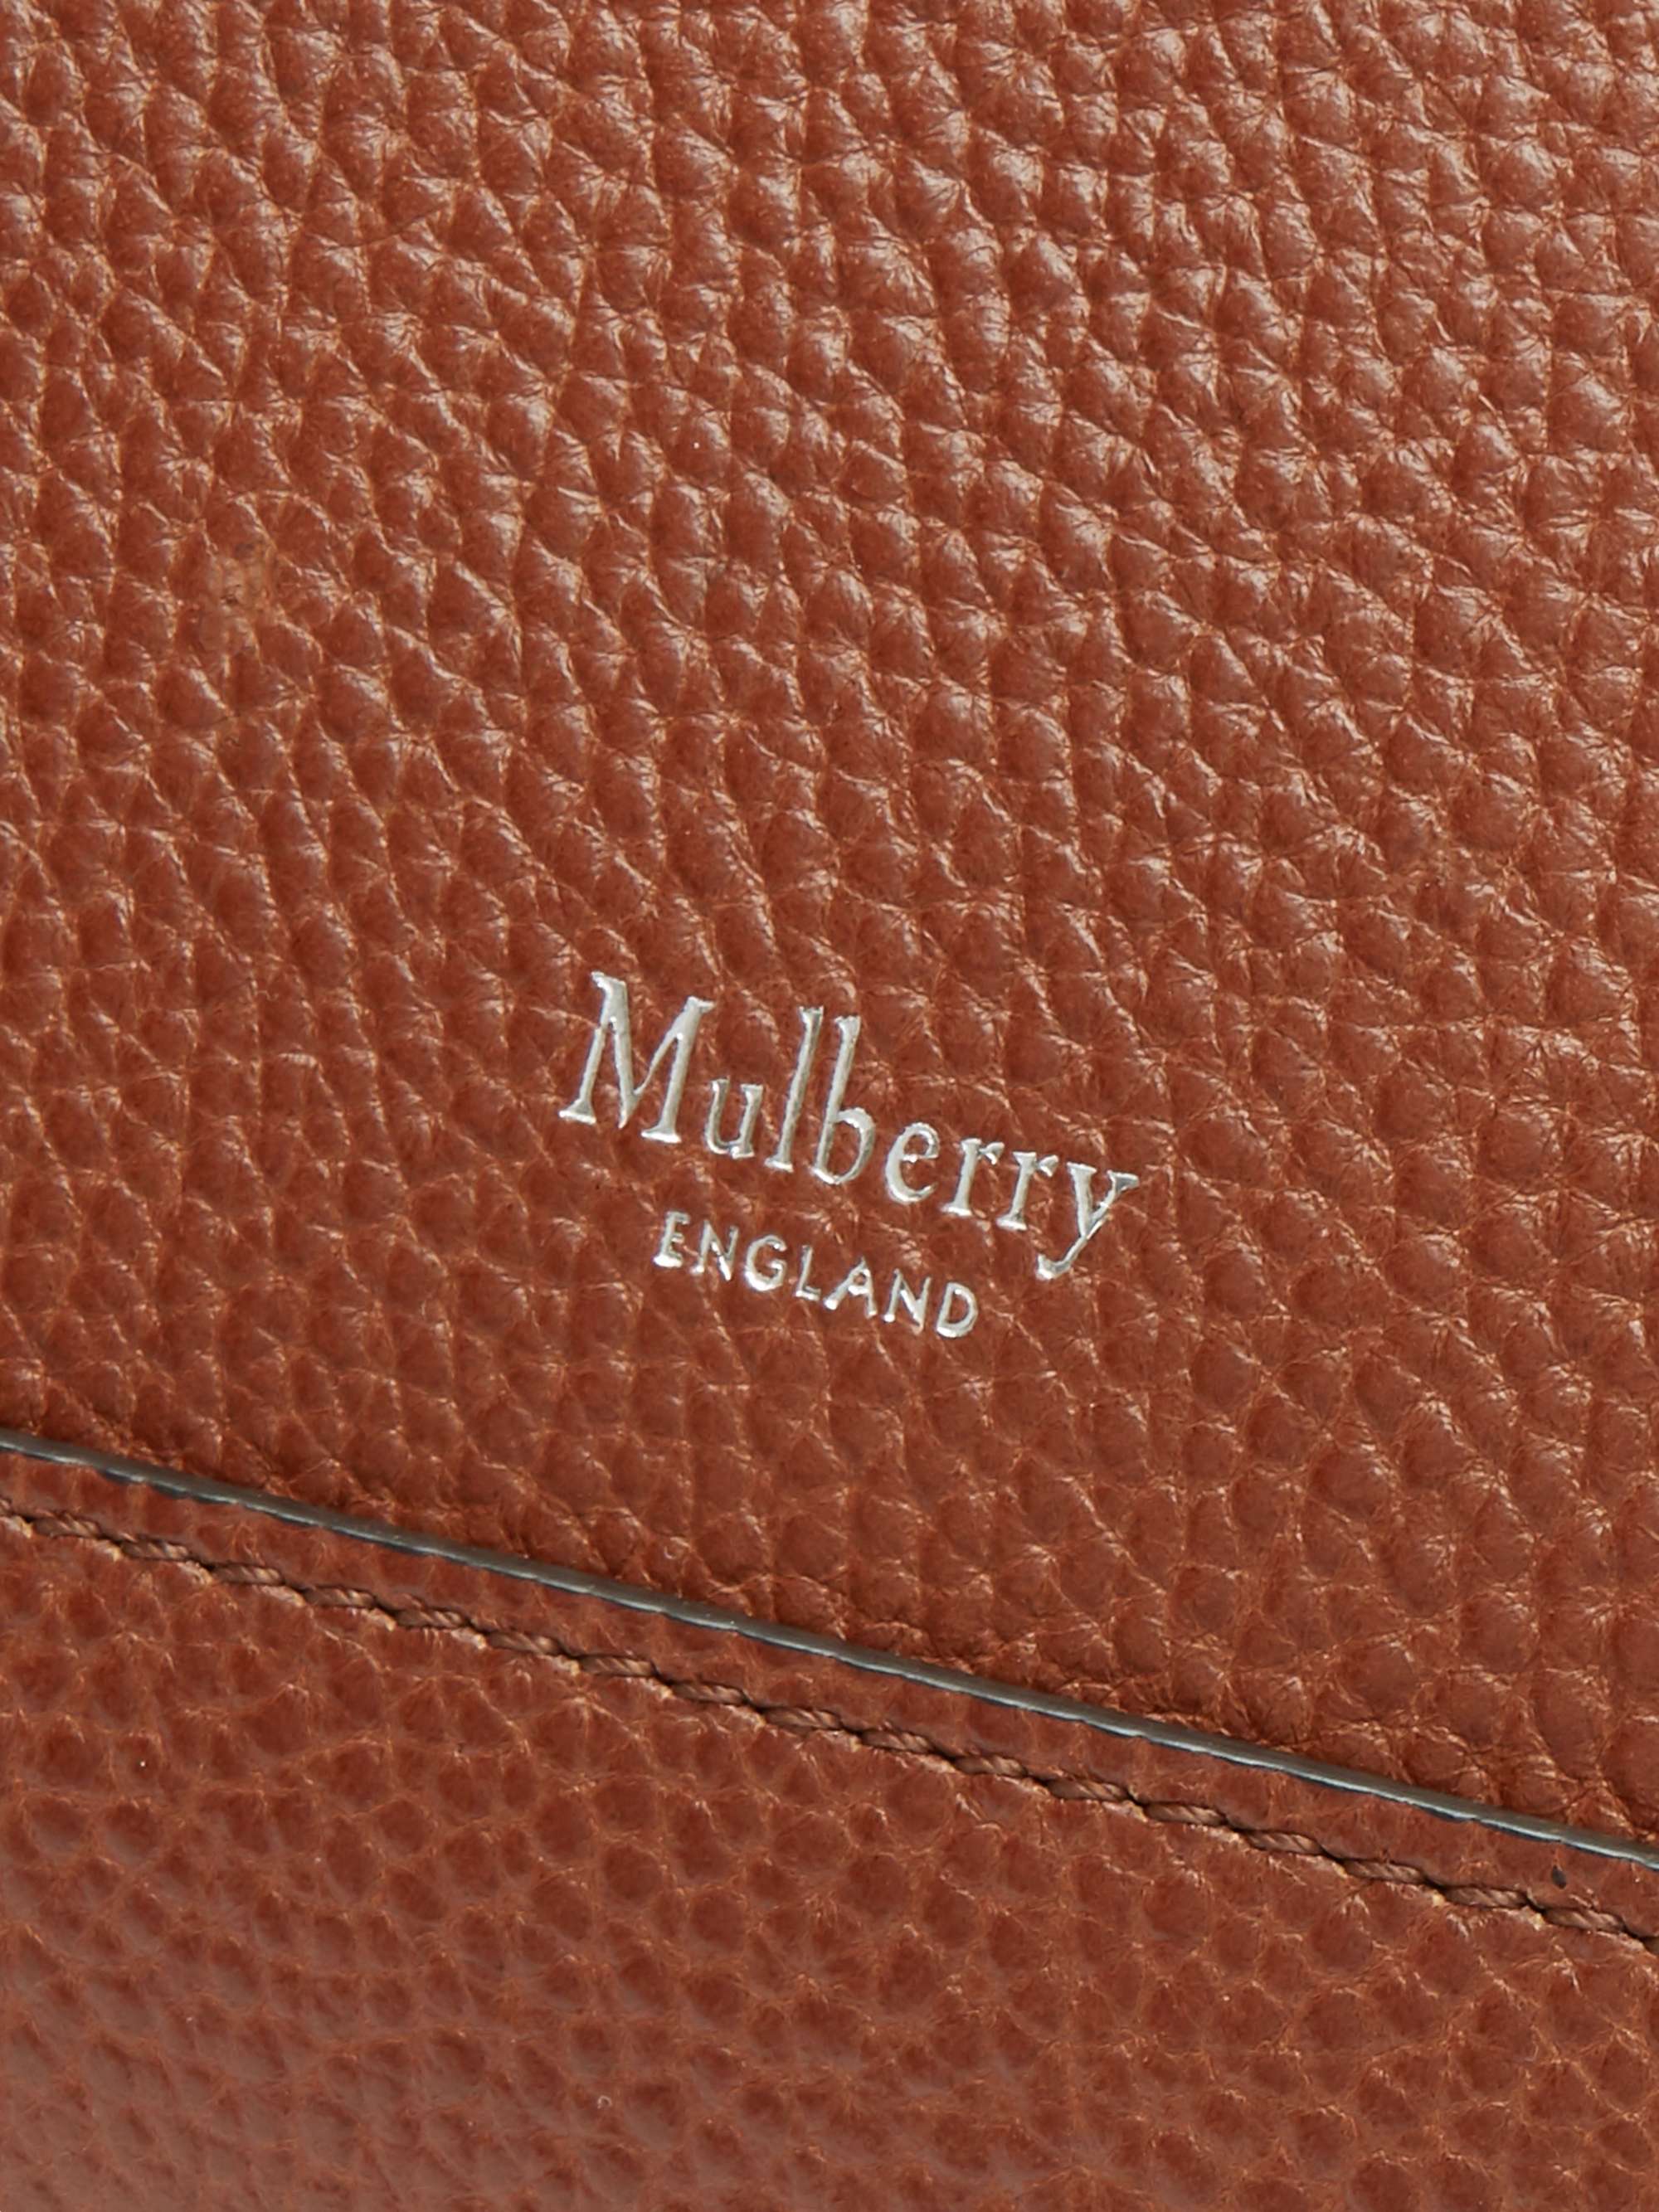 MULBERRY Belgrave Full-Grain Leather Briefcase